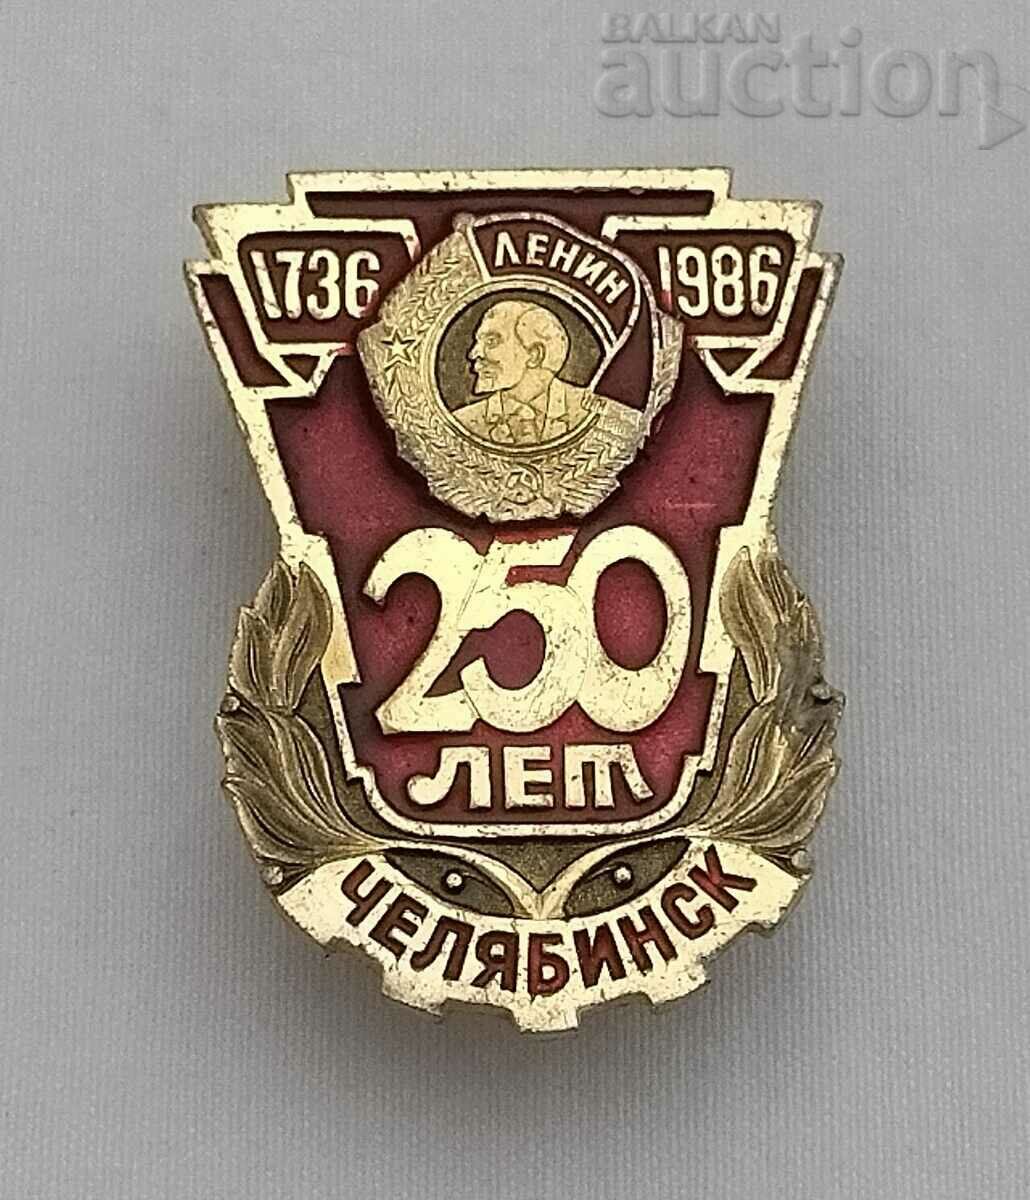 Chelyabinsk 250 ANNIVERSARY RUSSIA USSR BADGE 1986